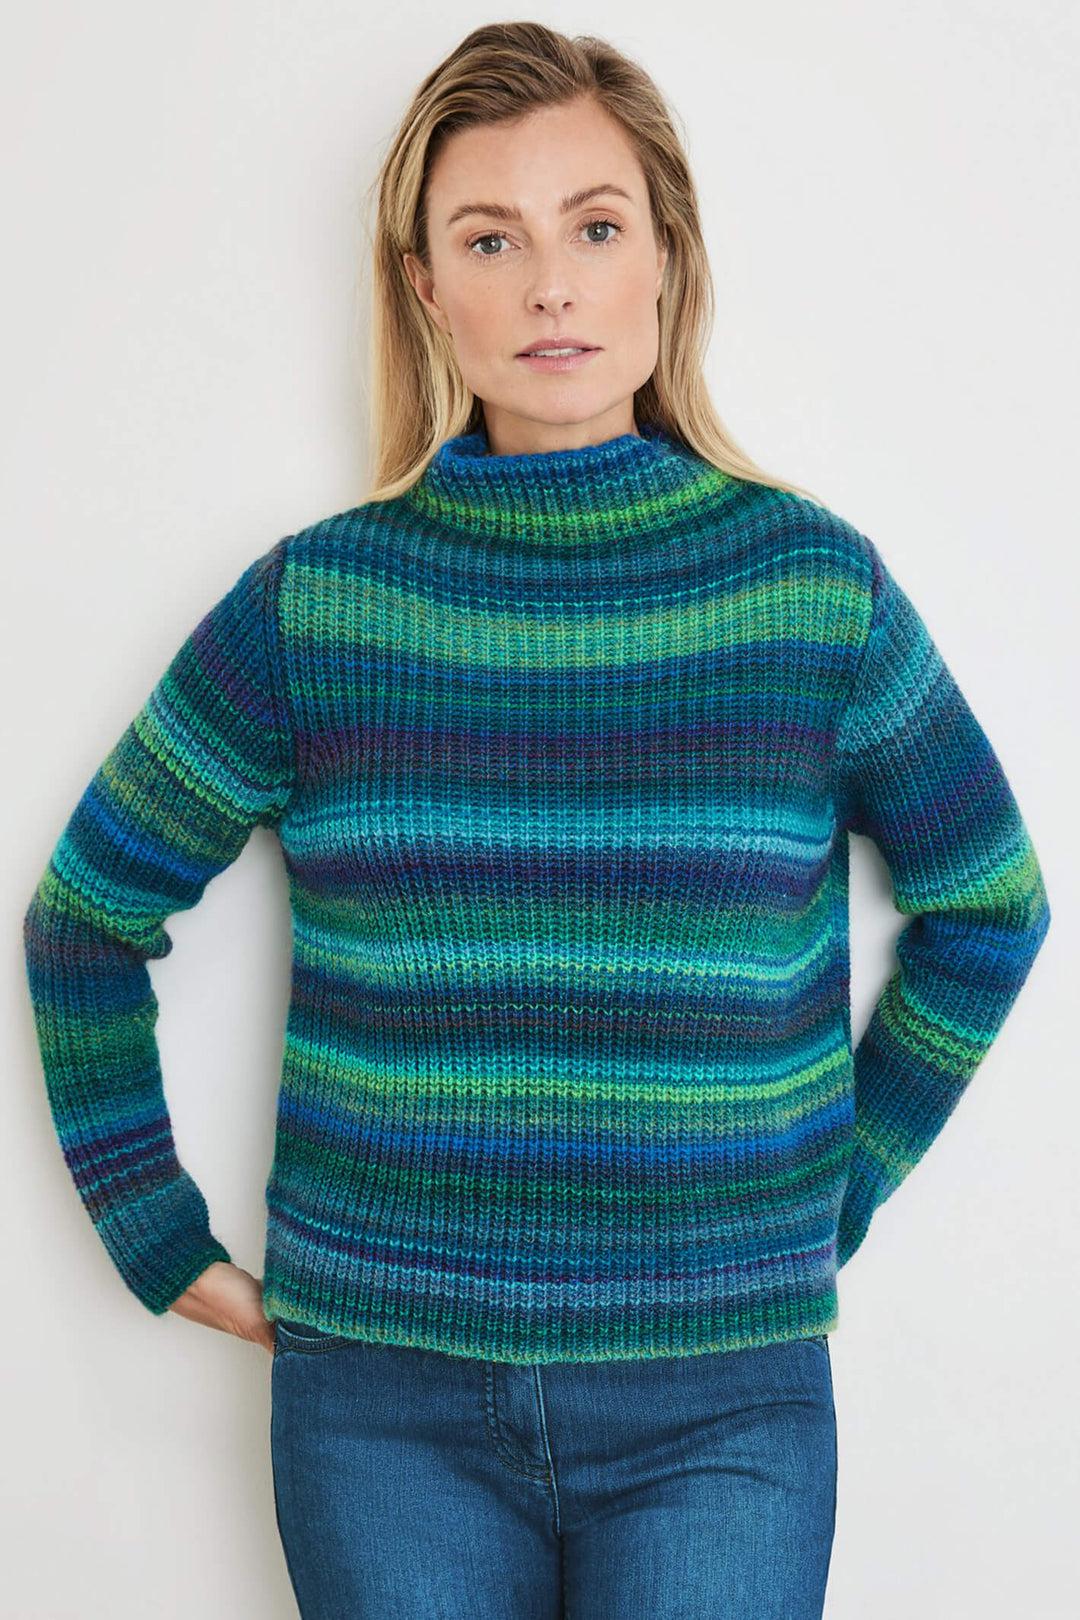 Gerry Weber 271039 Blue & Green Wool Blend Knitted Jumper - Experience Boutique